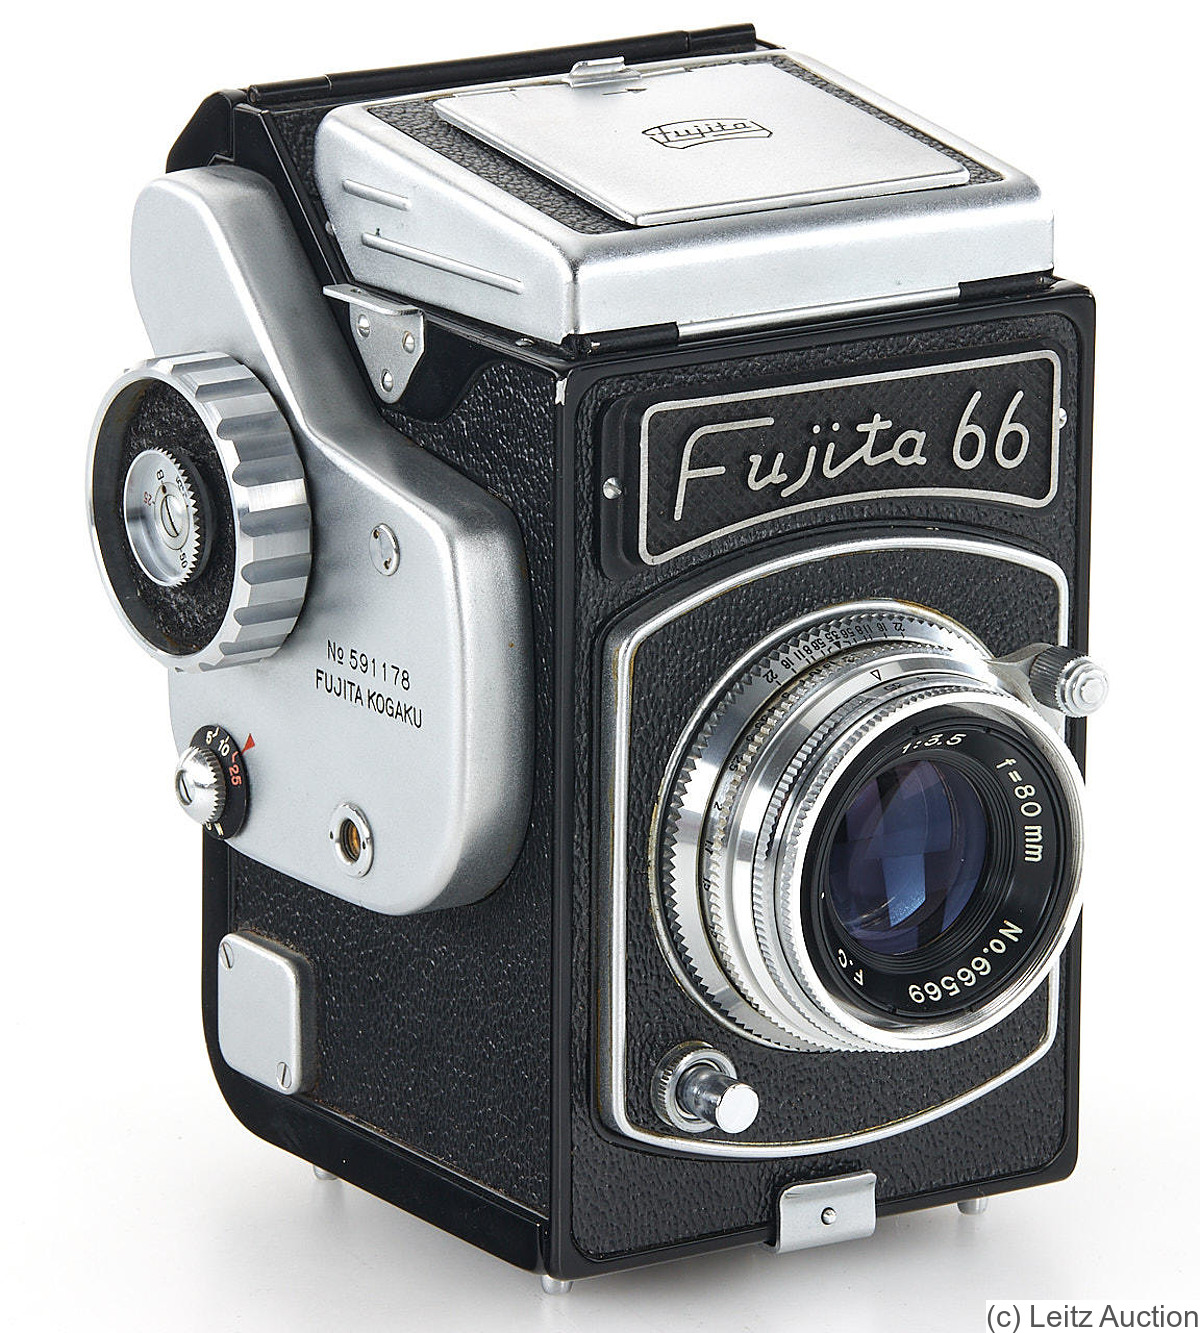 Fujita: Fujita 66 SL camera